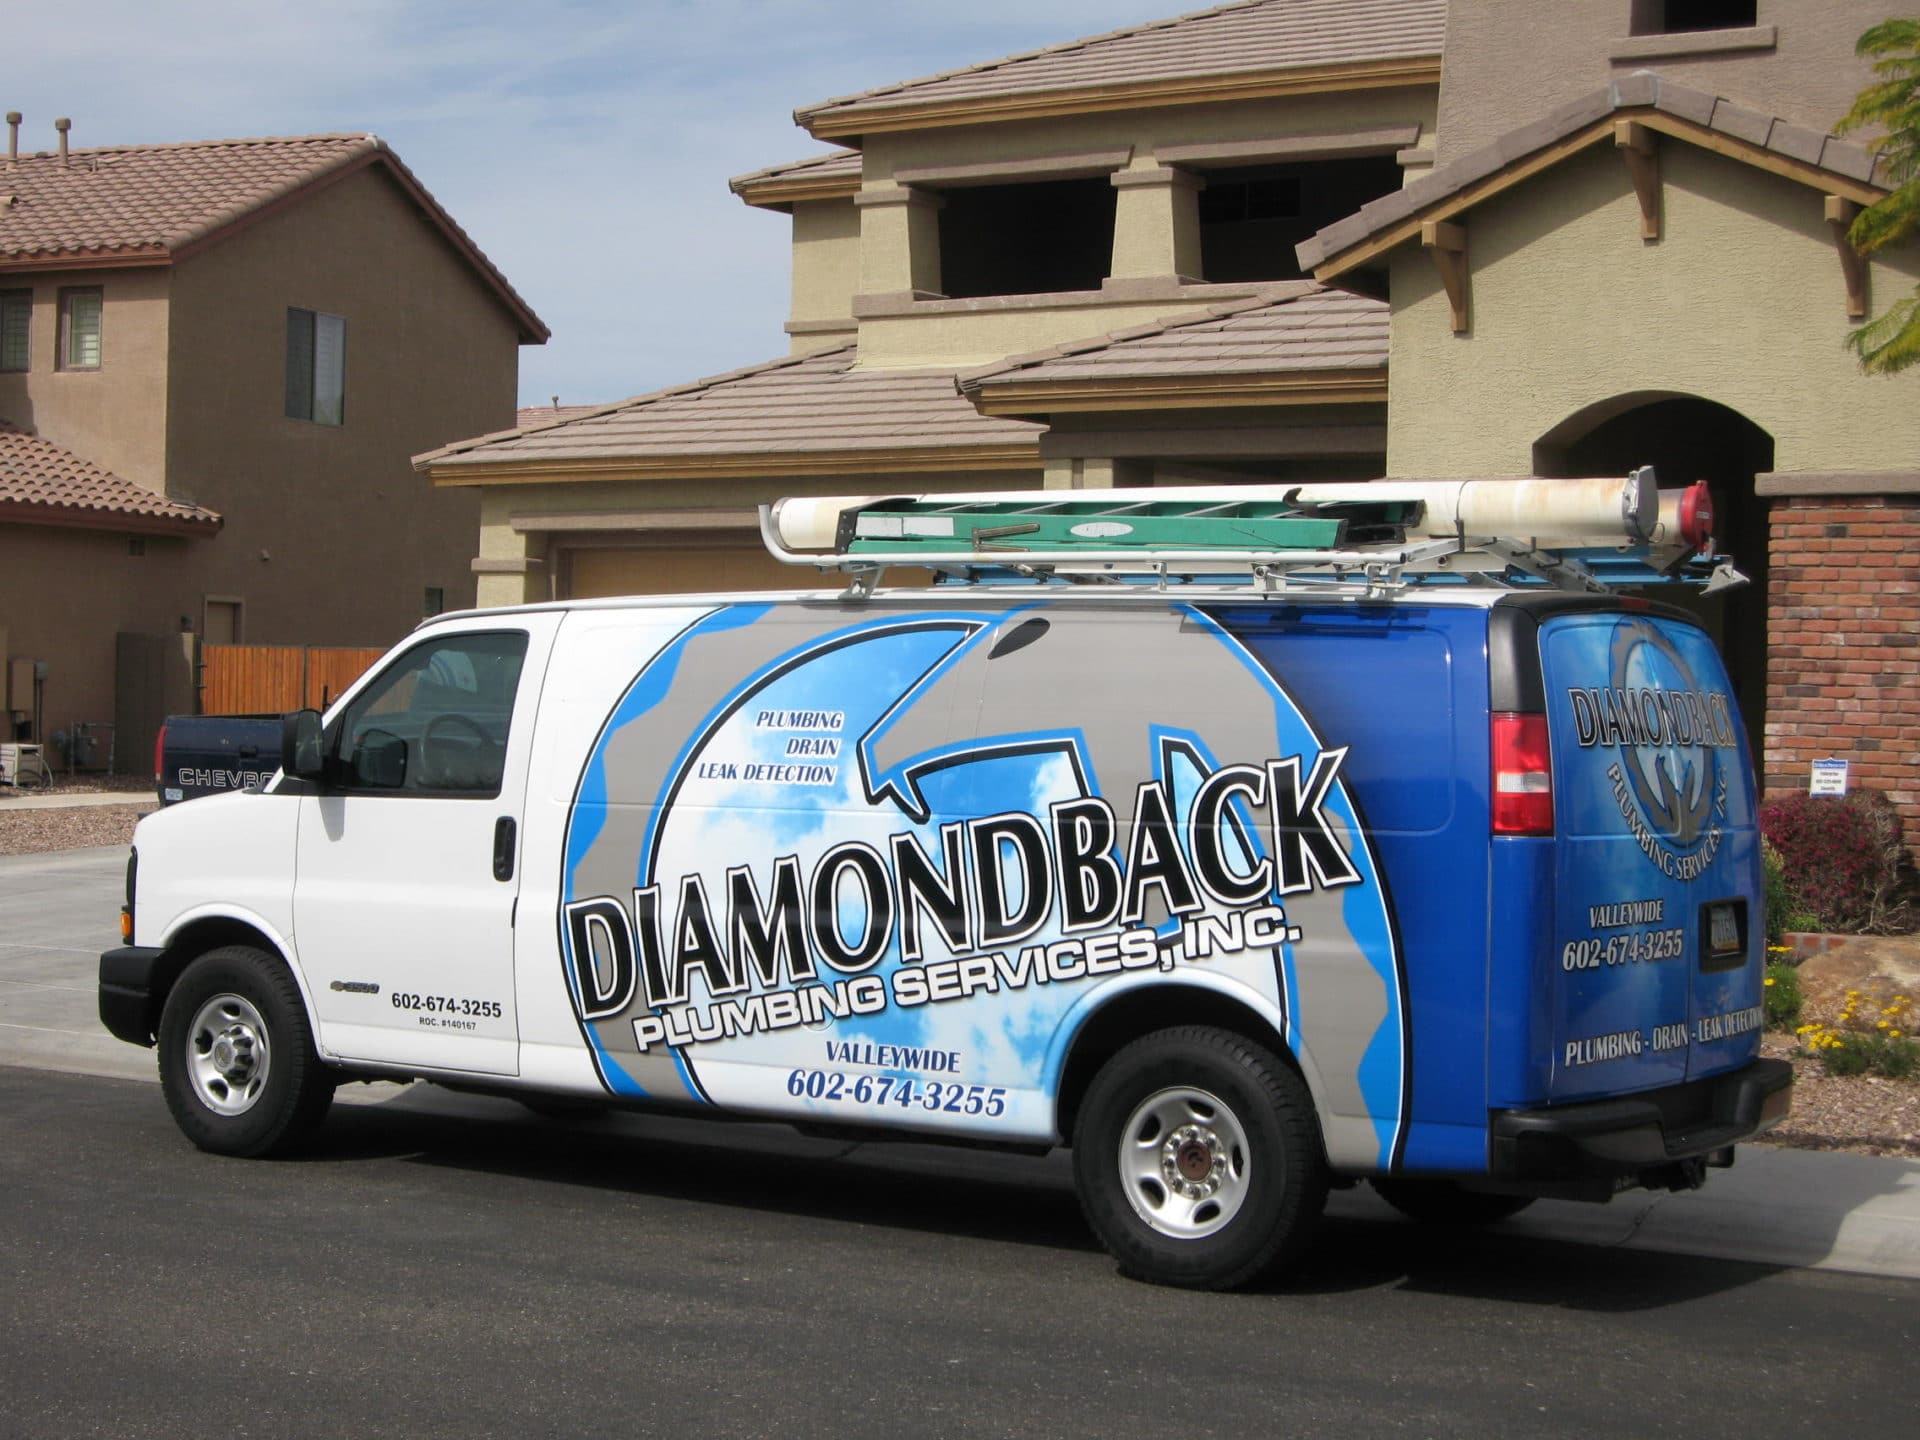 Plumbing Services In Tempe Arizona Diamondback Plumbing